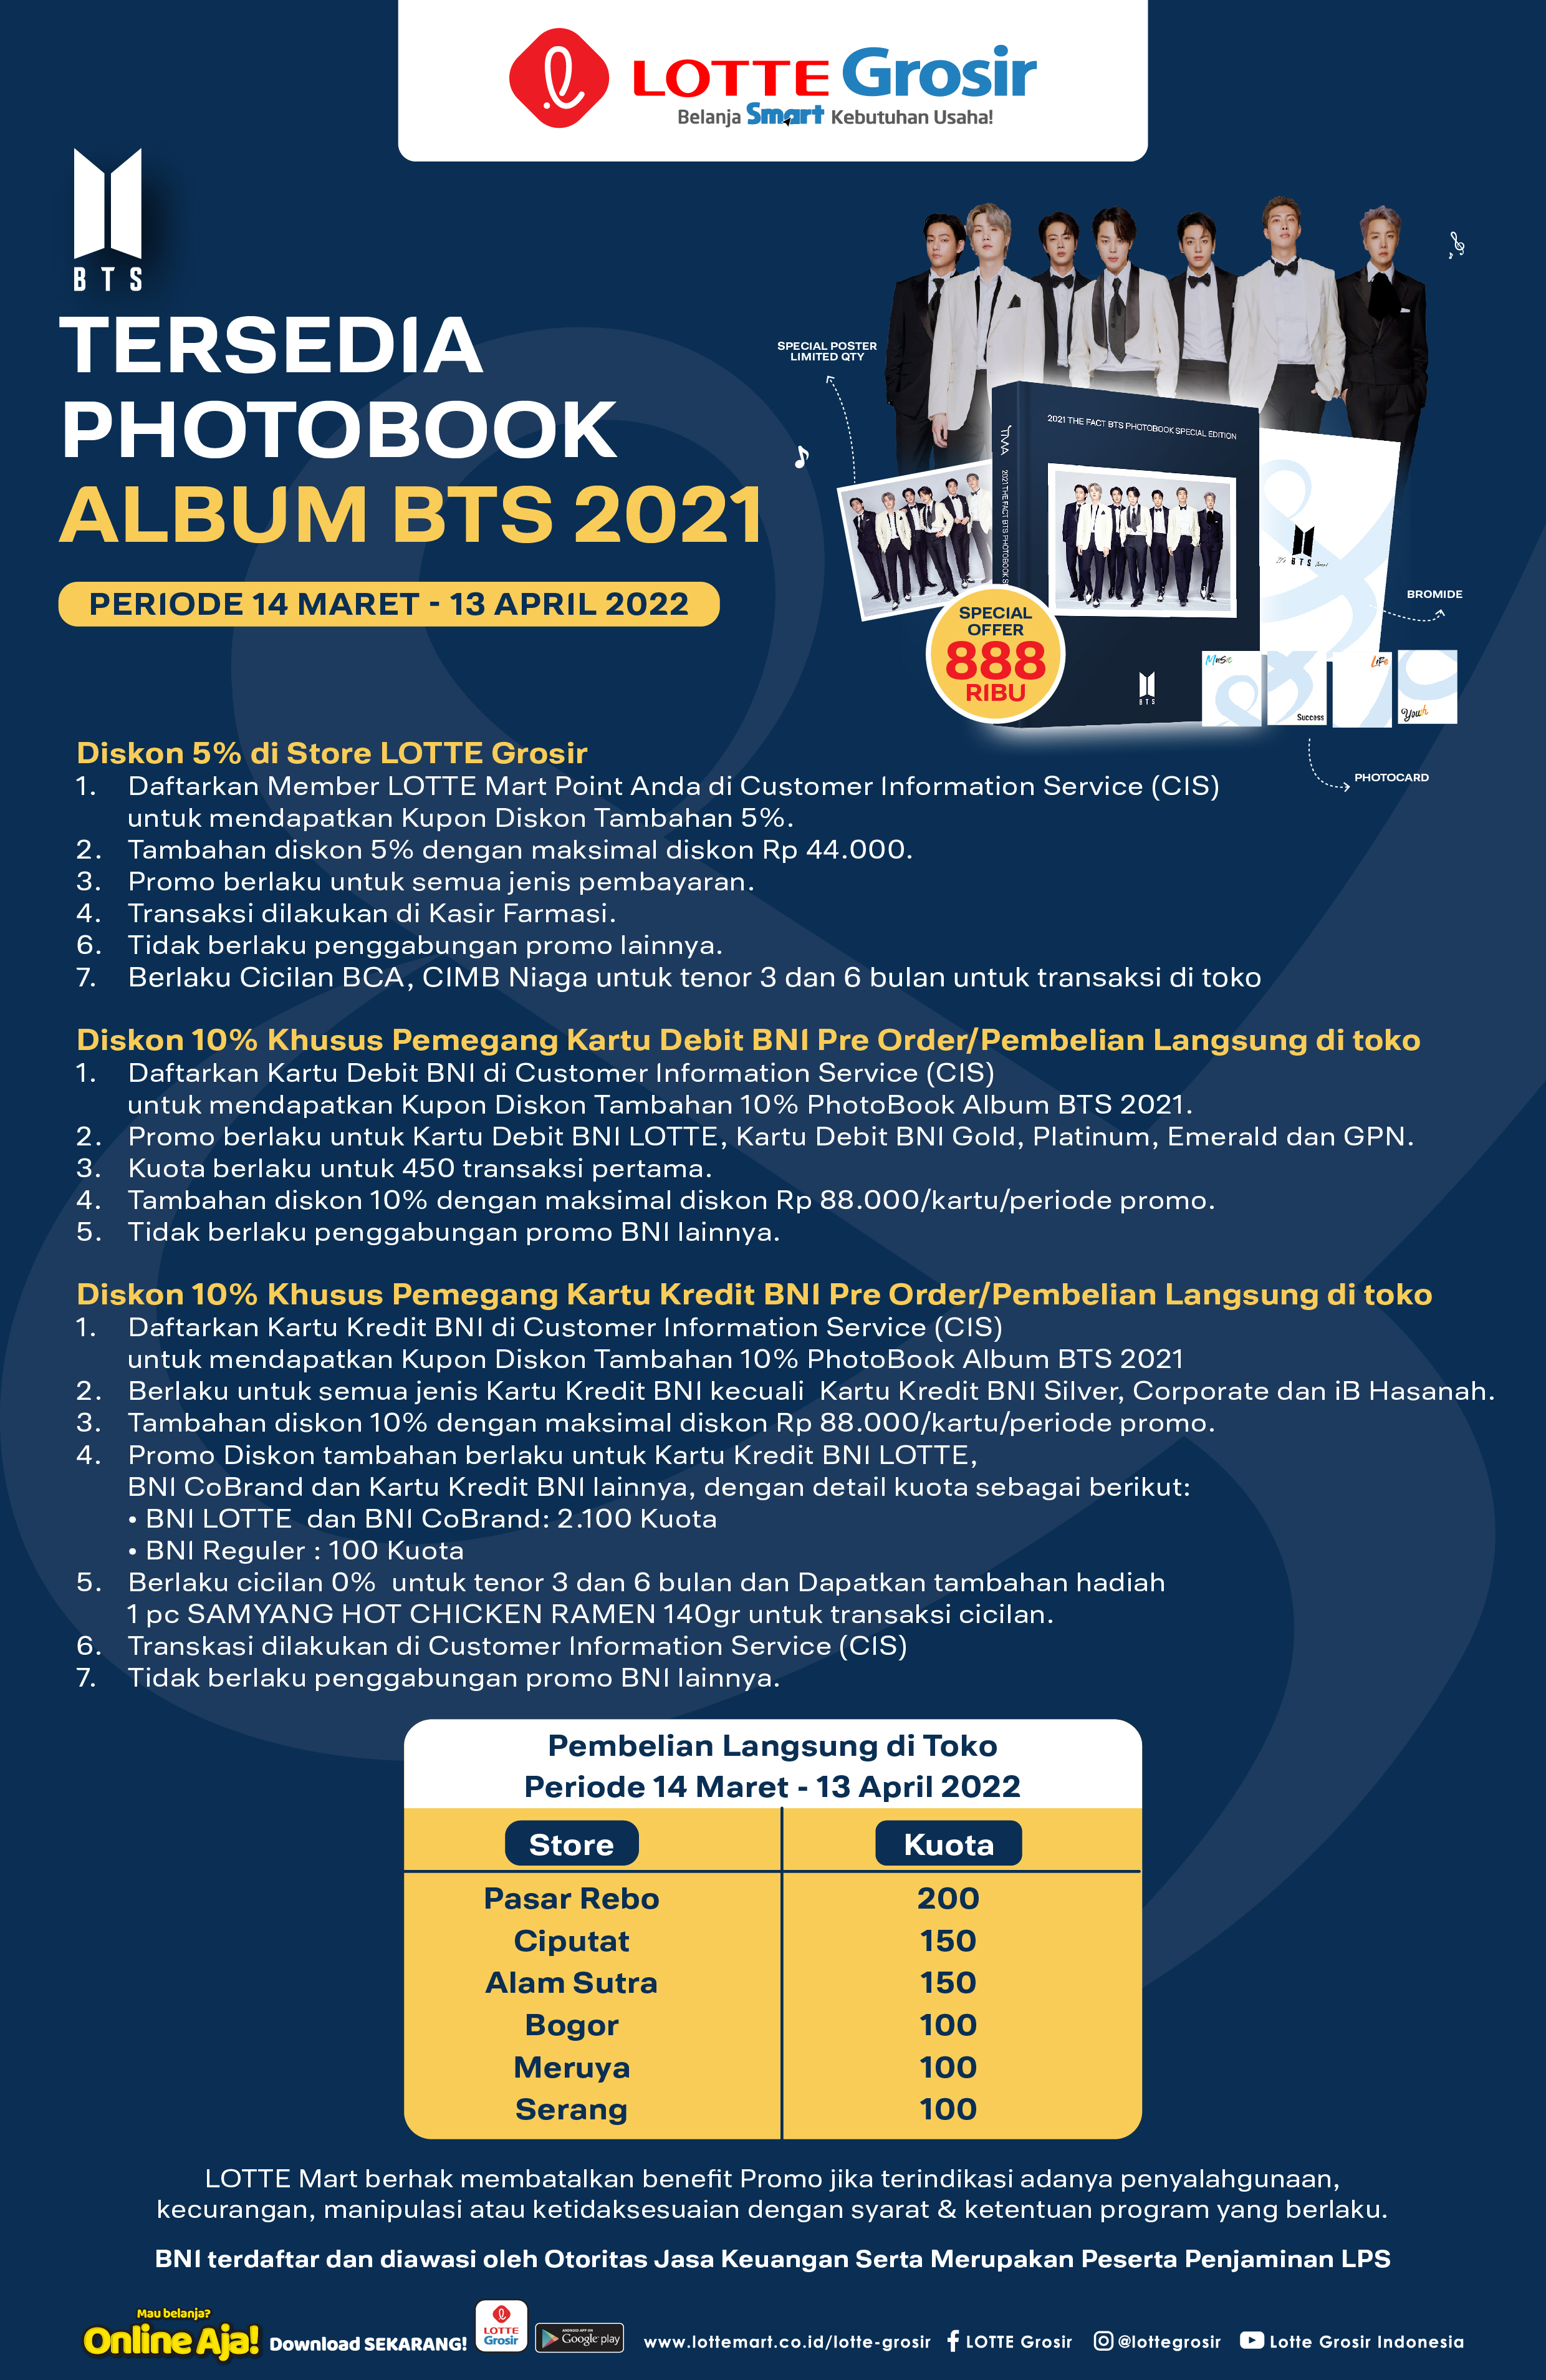 Promo Photobook Album BTS 2021 LMILSI 60x120cm BITLY 01 FW